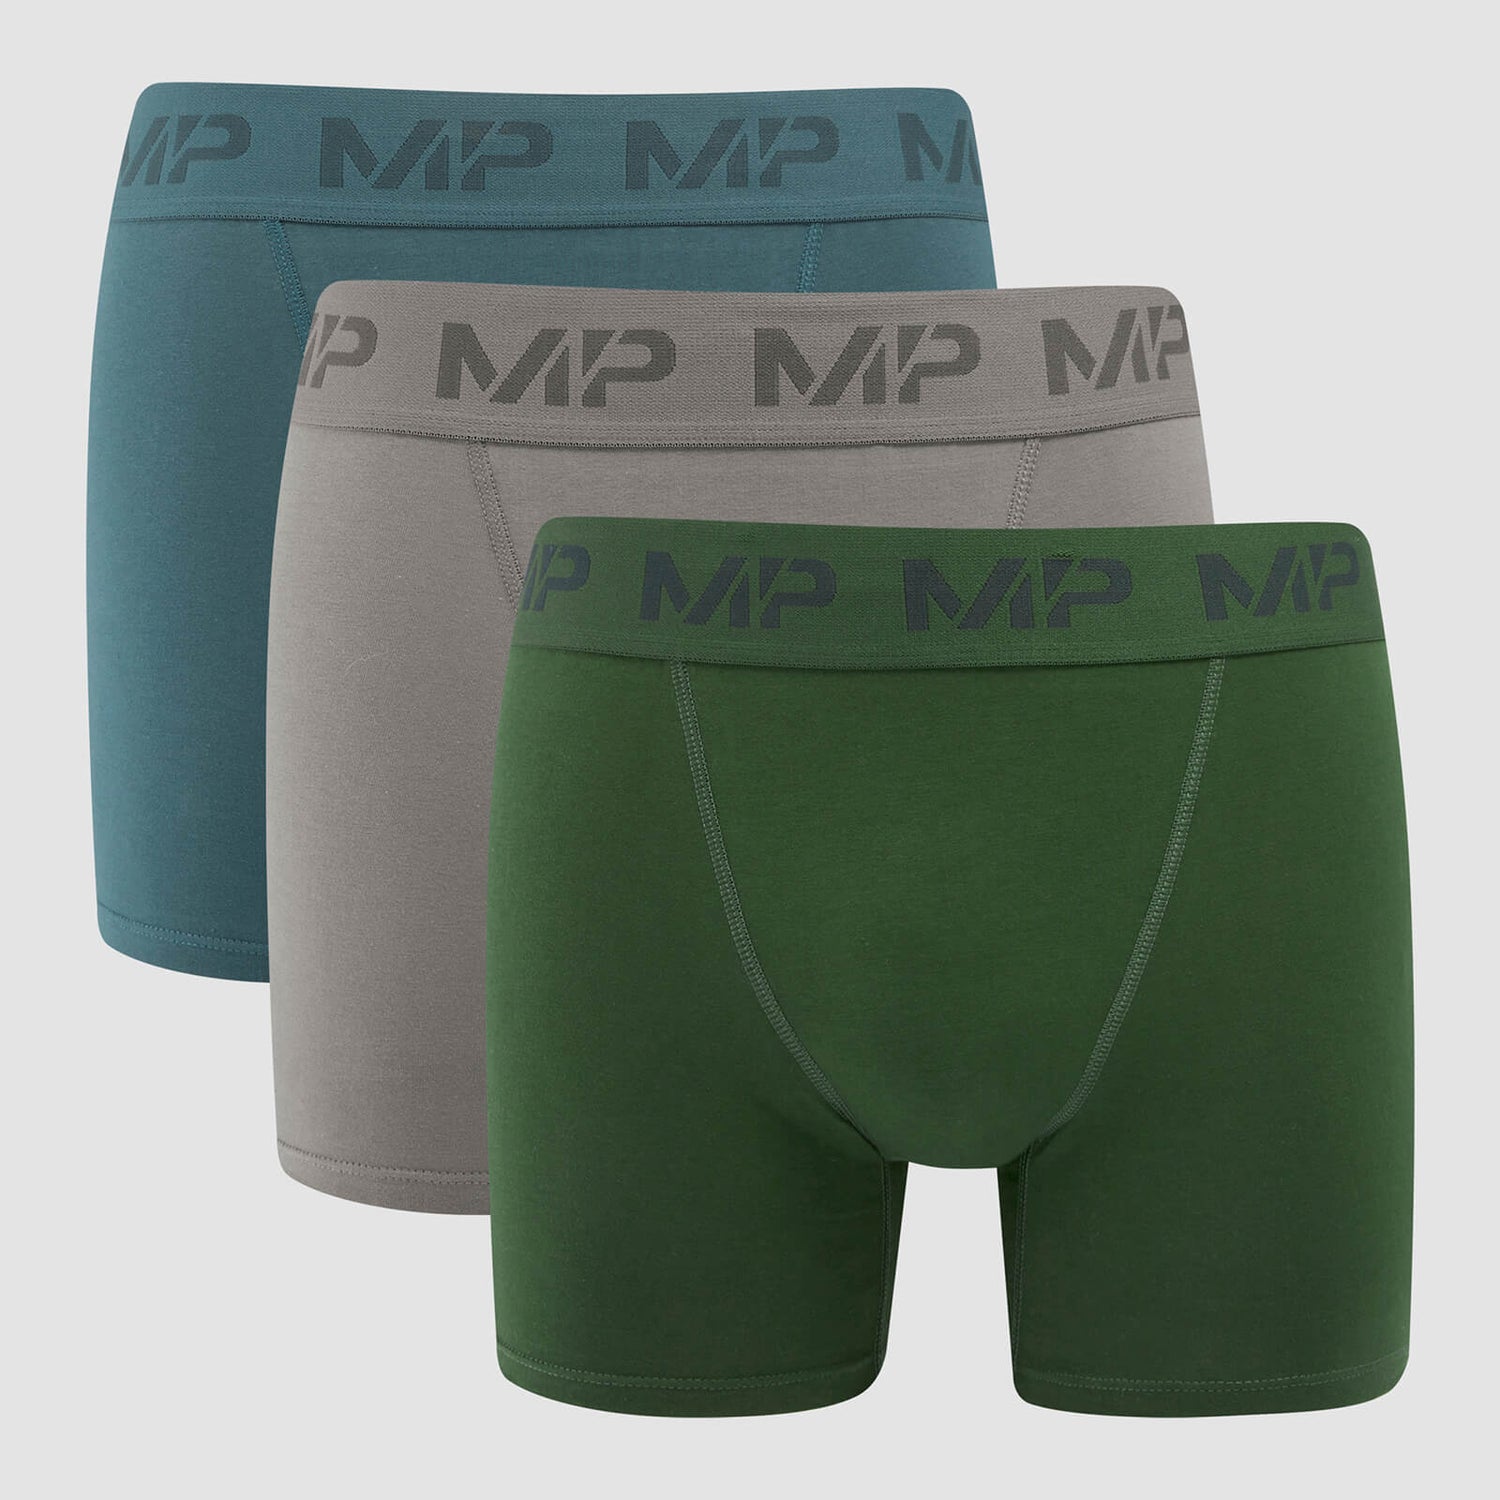 MP Men's Boxers (3 Pack) Carbon/Smoke Blue/Dark Green - M